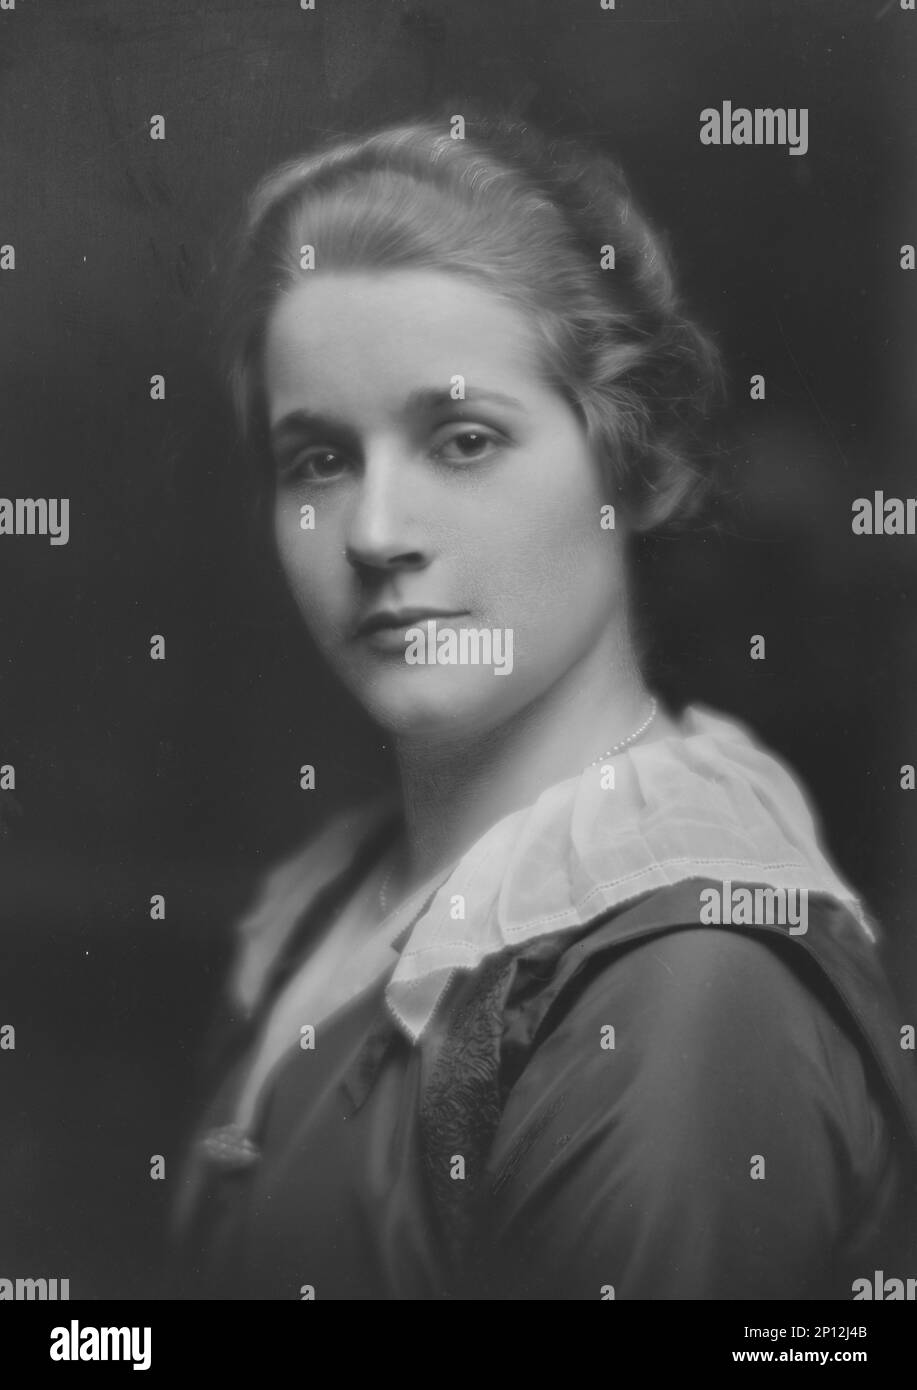 Mary pierce Black and White Stock Photos & Images - Alamy